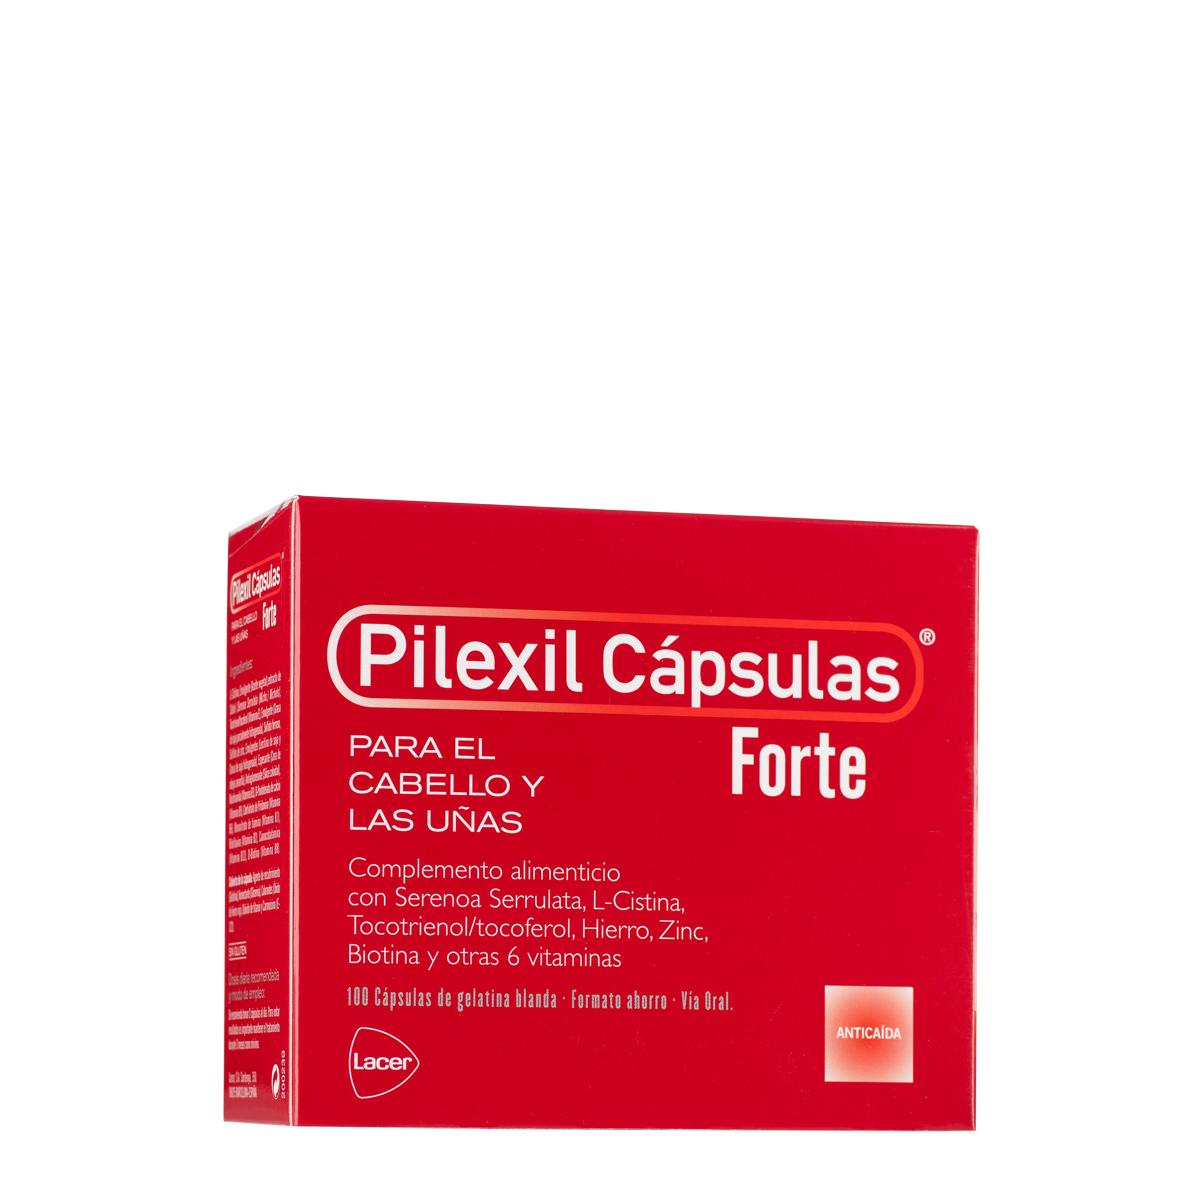 Pilexil - Pilexil capsulas forte 100 cápsulas